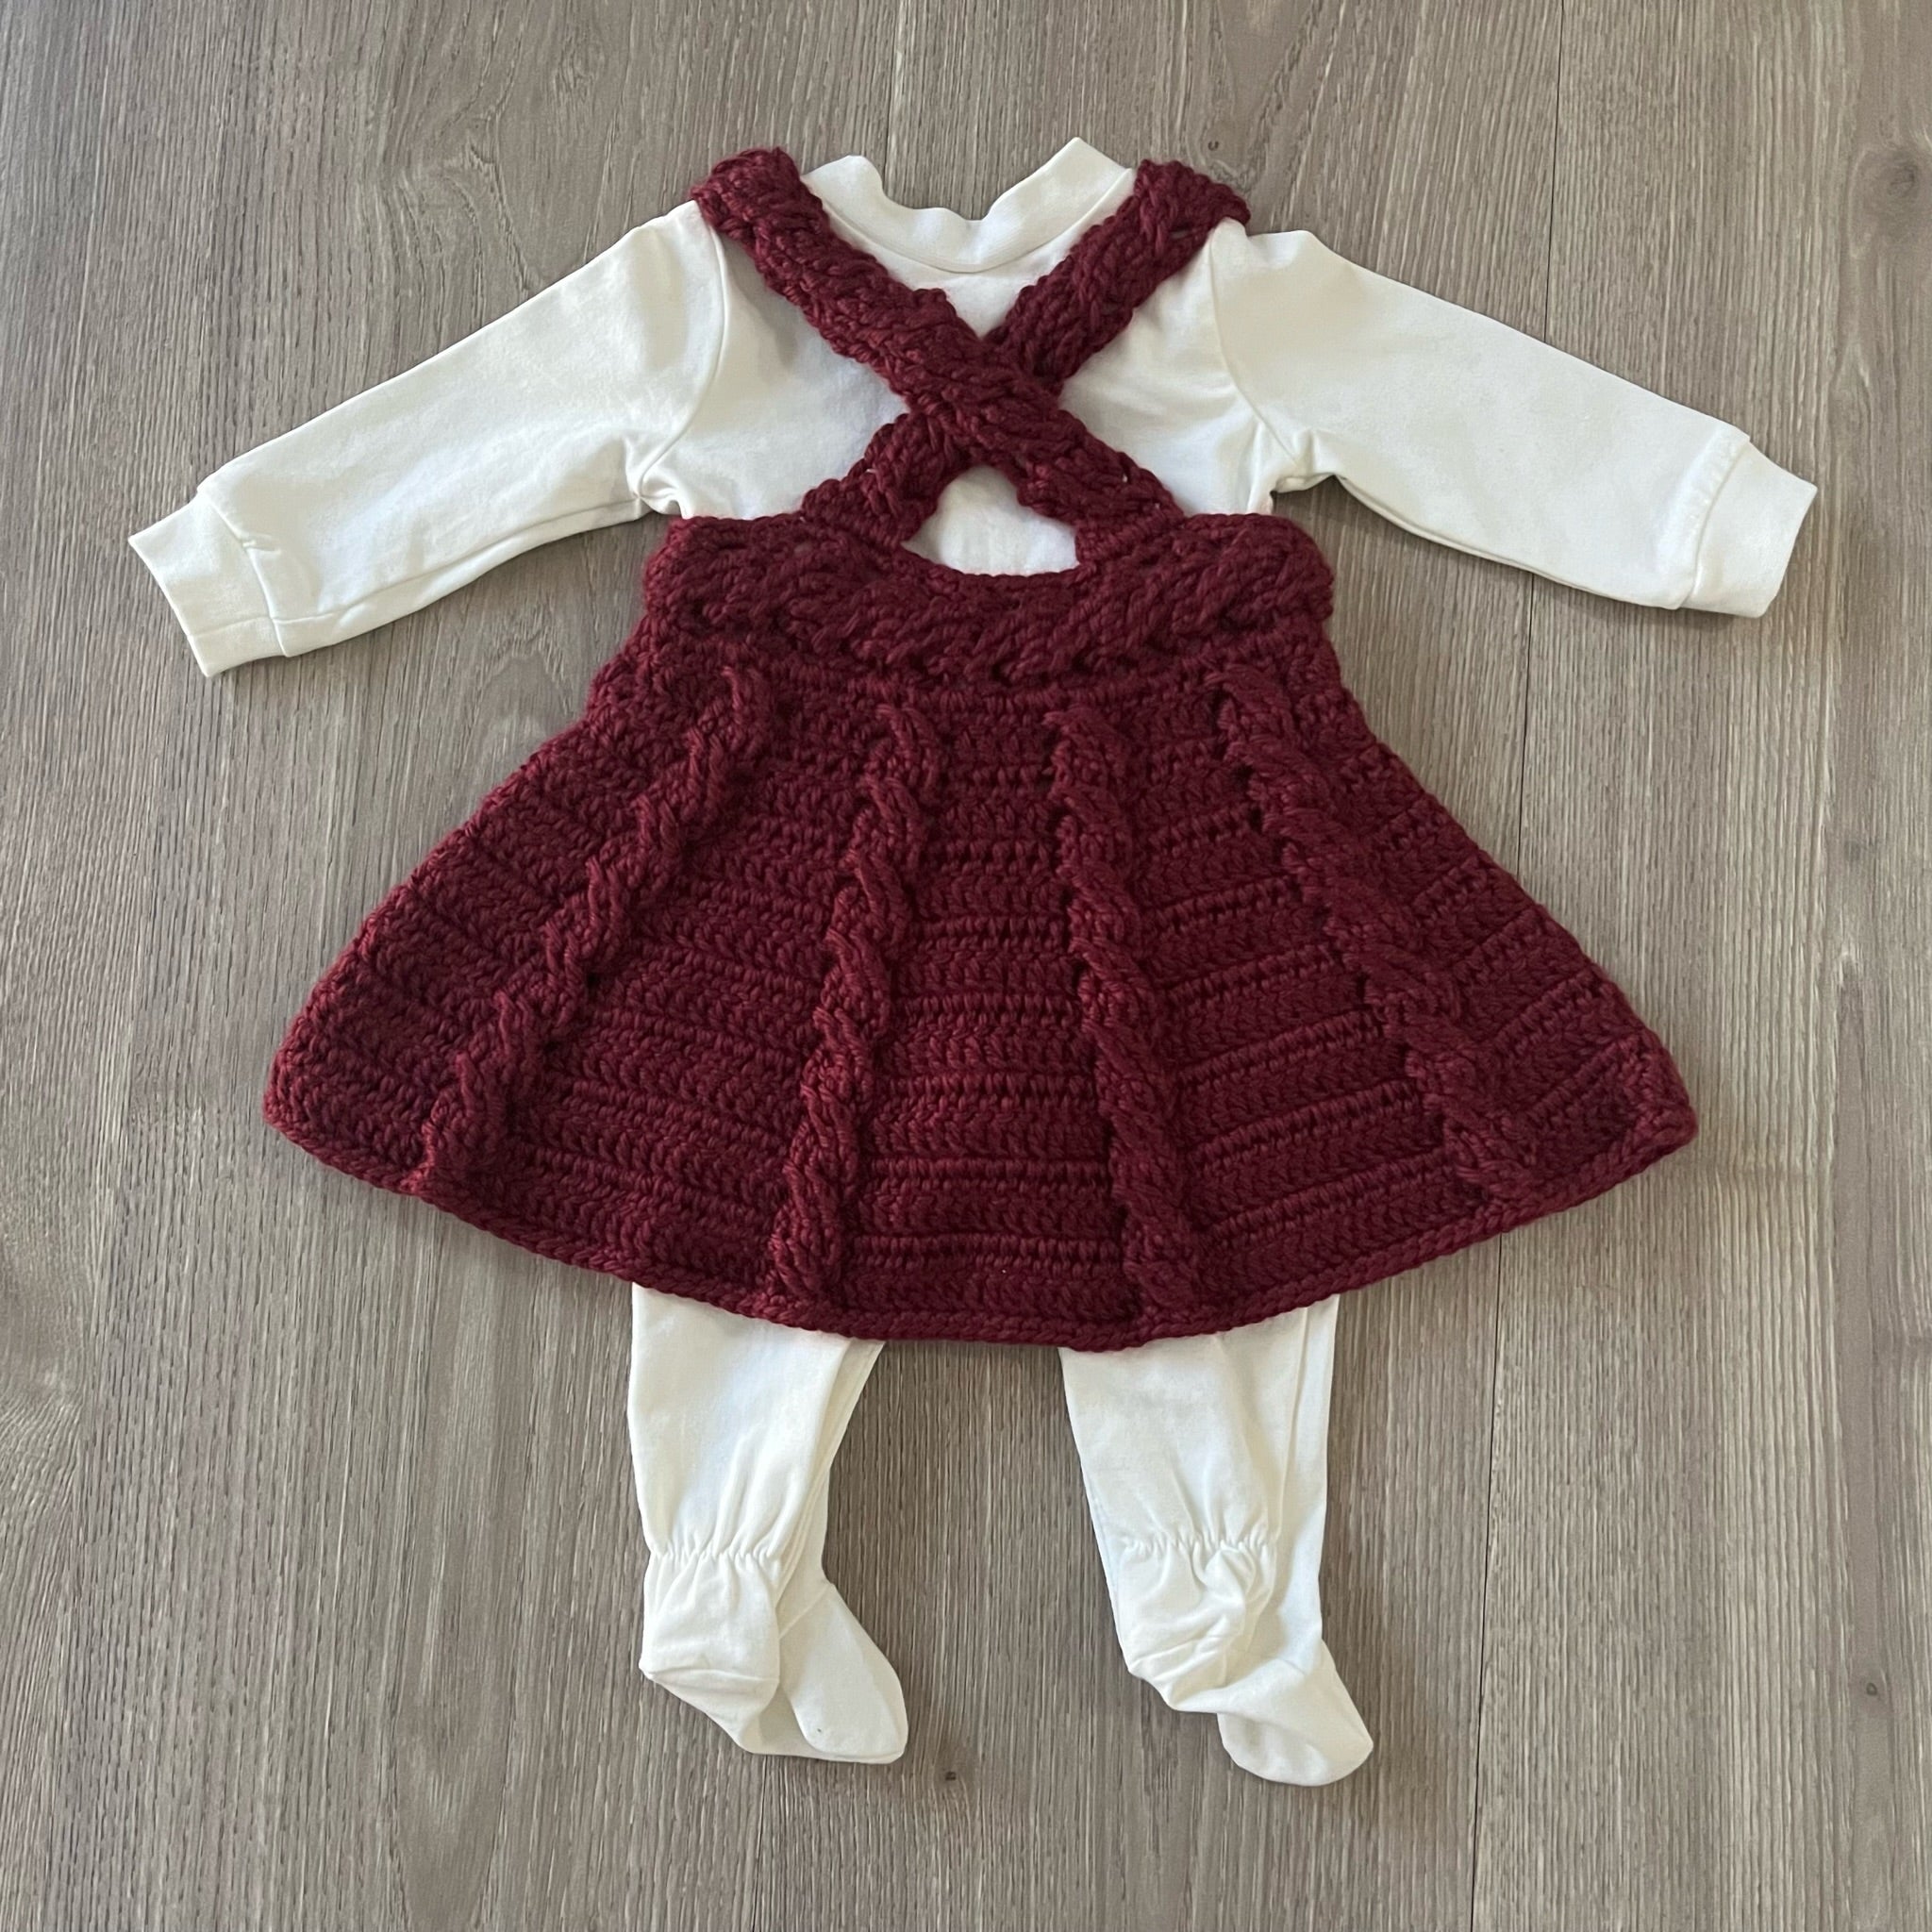 Tutorial Baby Crochet Dress - YouTube